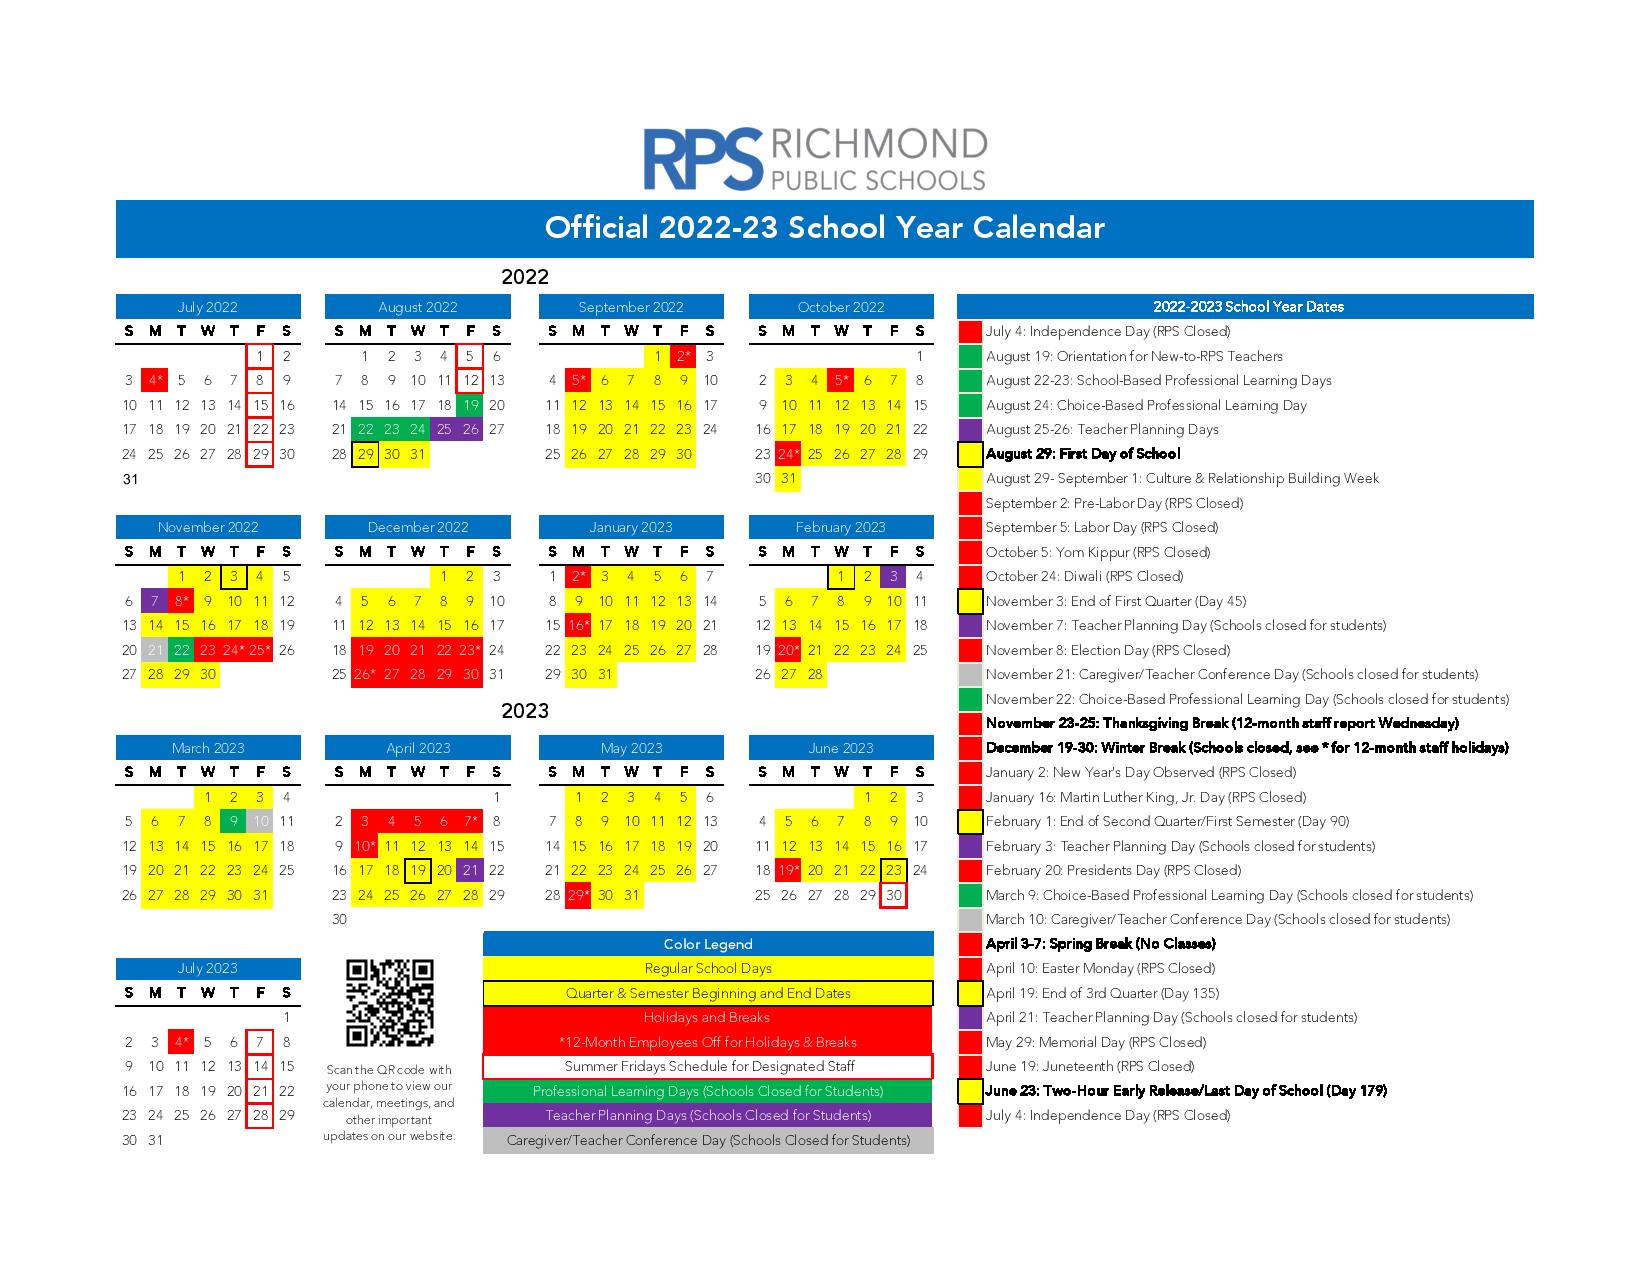 Richmond City Public Schools Calendar 20222023 in PDF